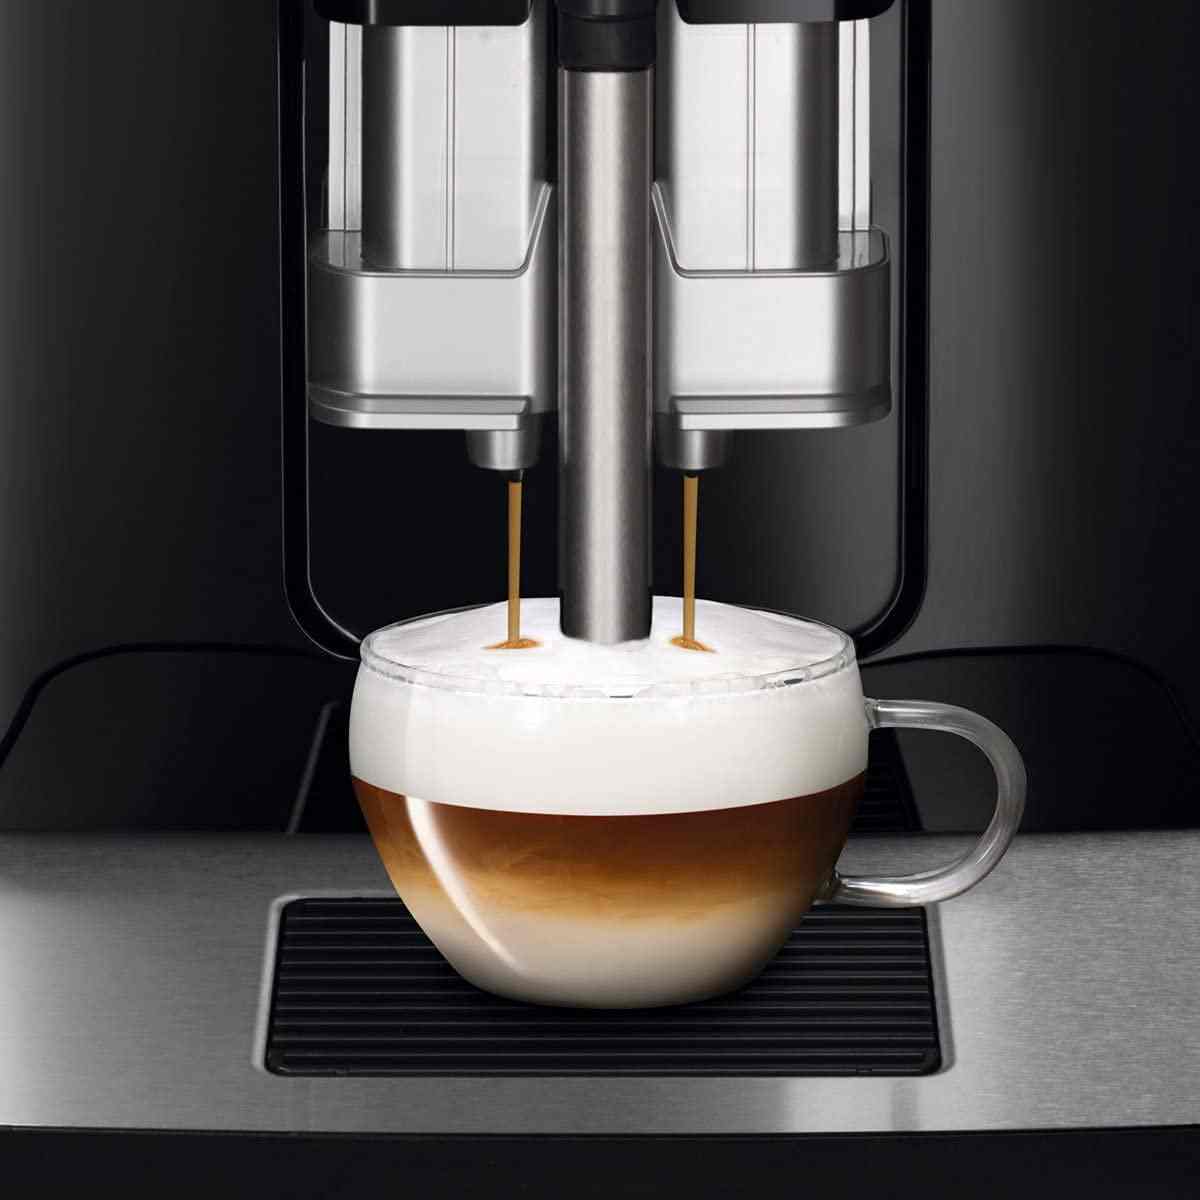 Bosch Automatic Coffee Machine